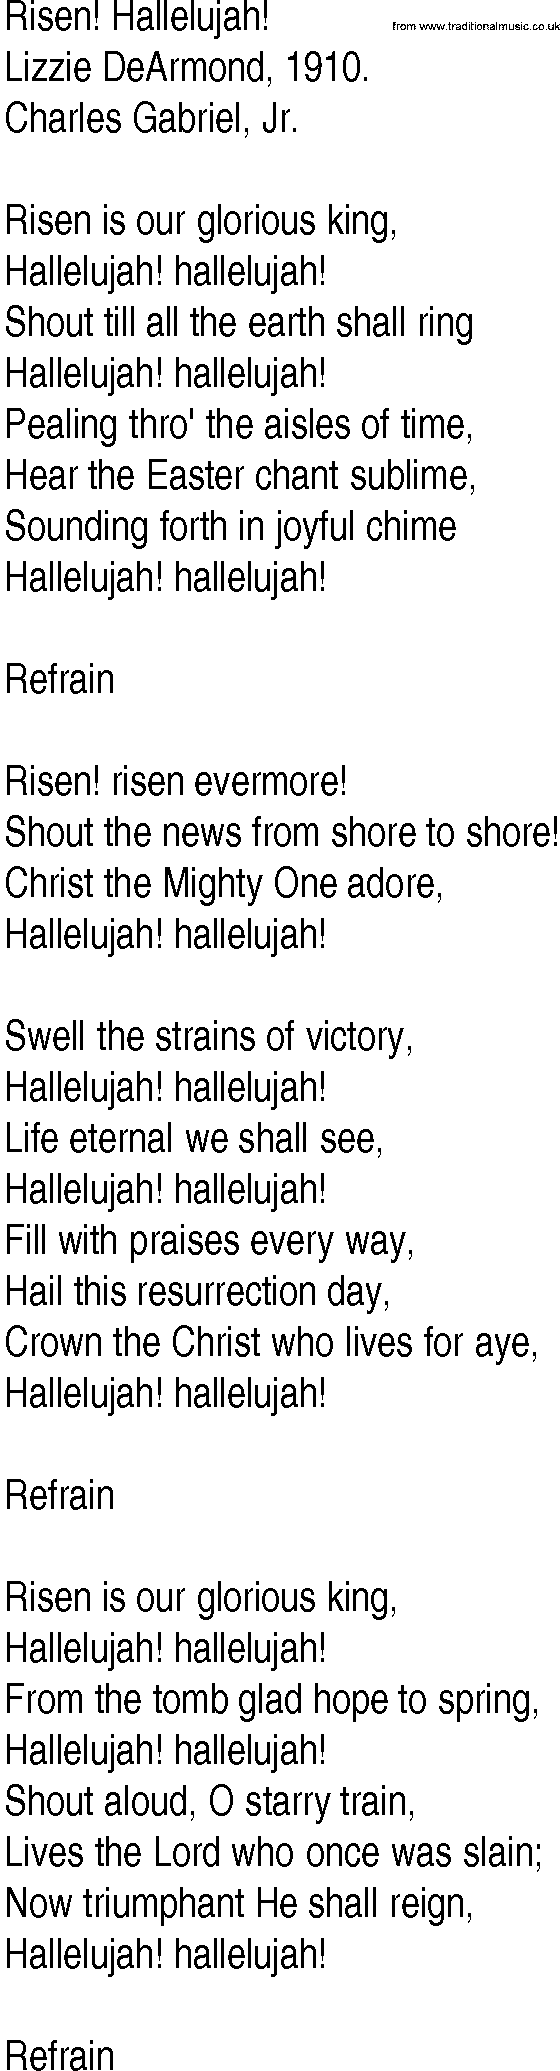 Hymn and Gospel Song: Risen! Hallelujah! by Lizzie DeArmond lyrics